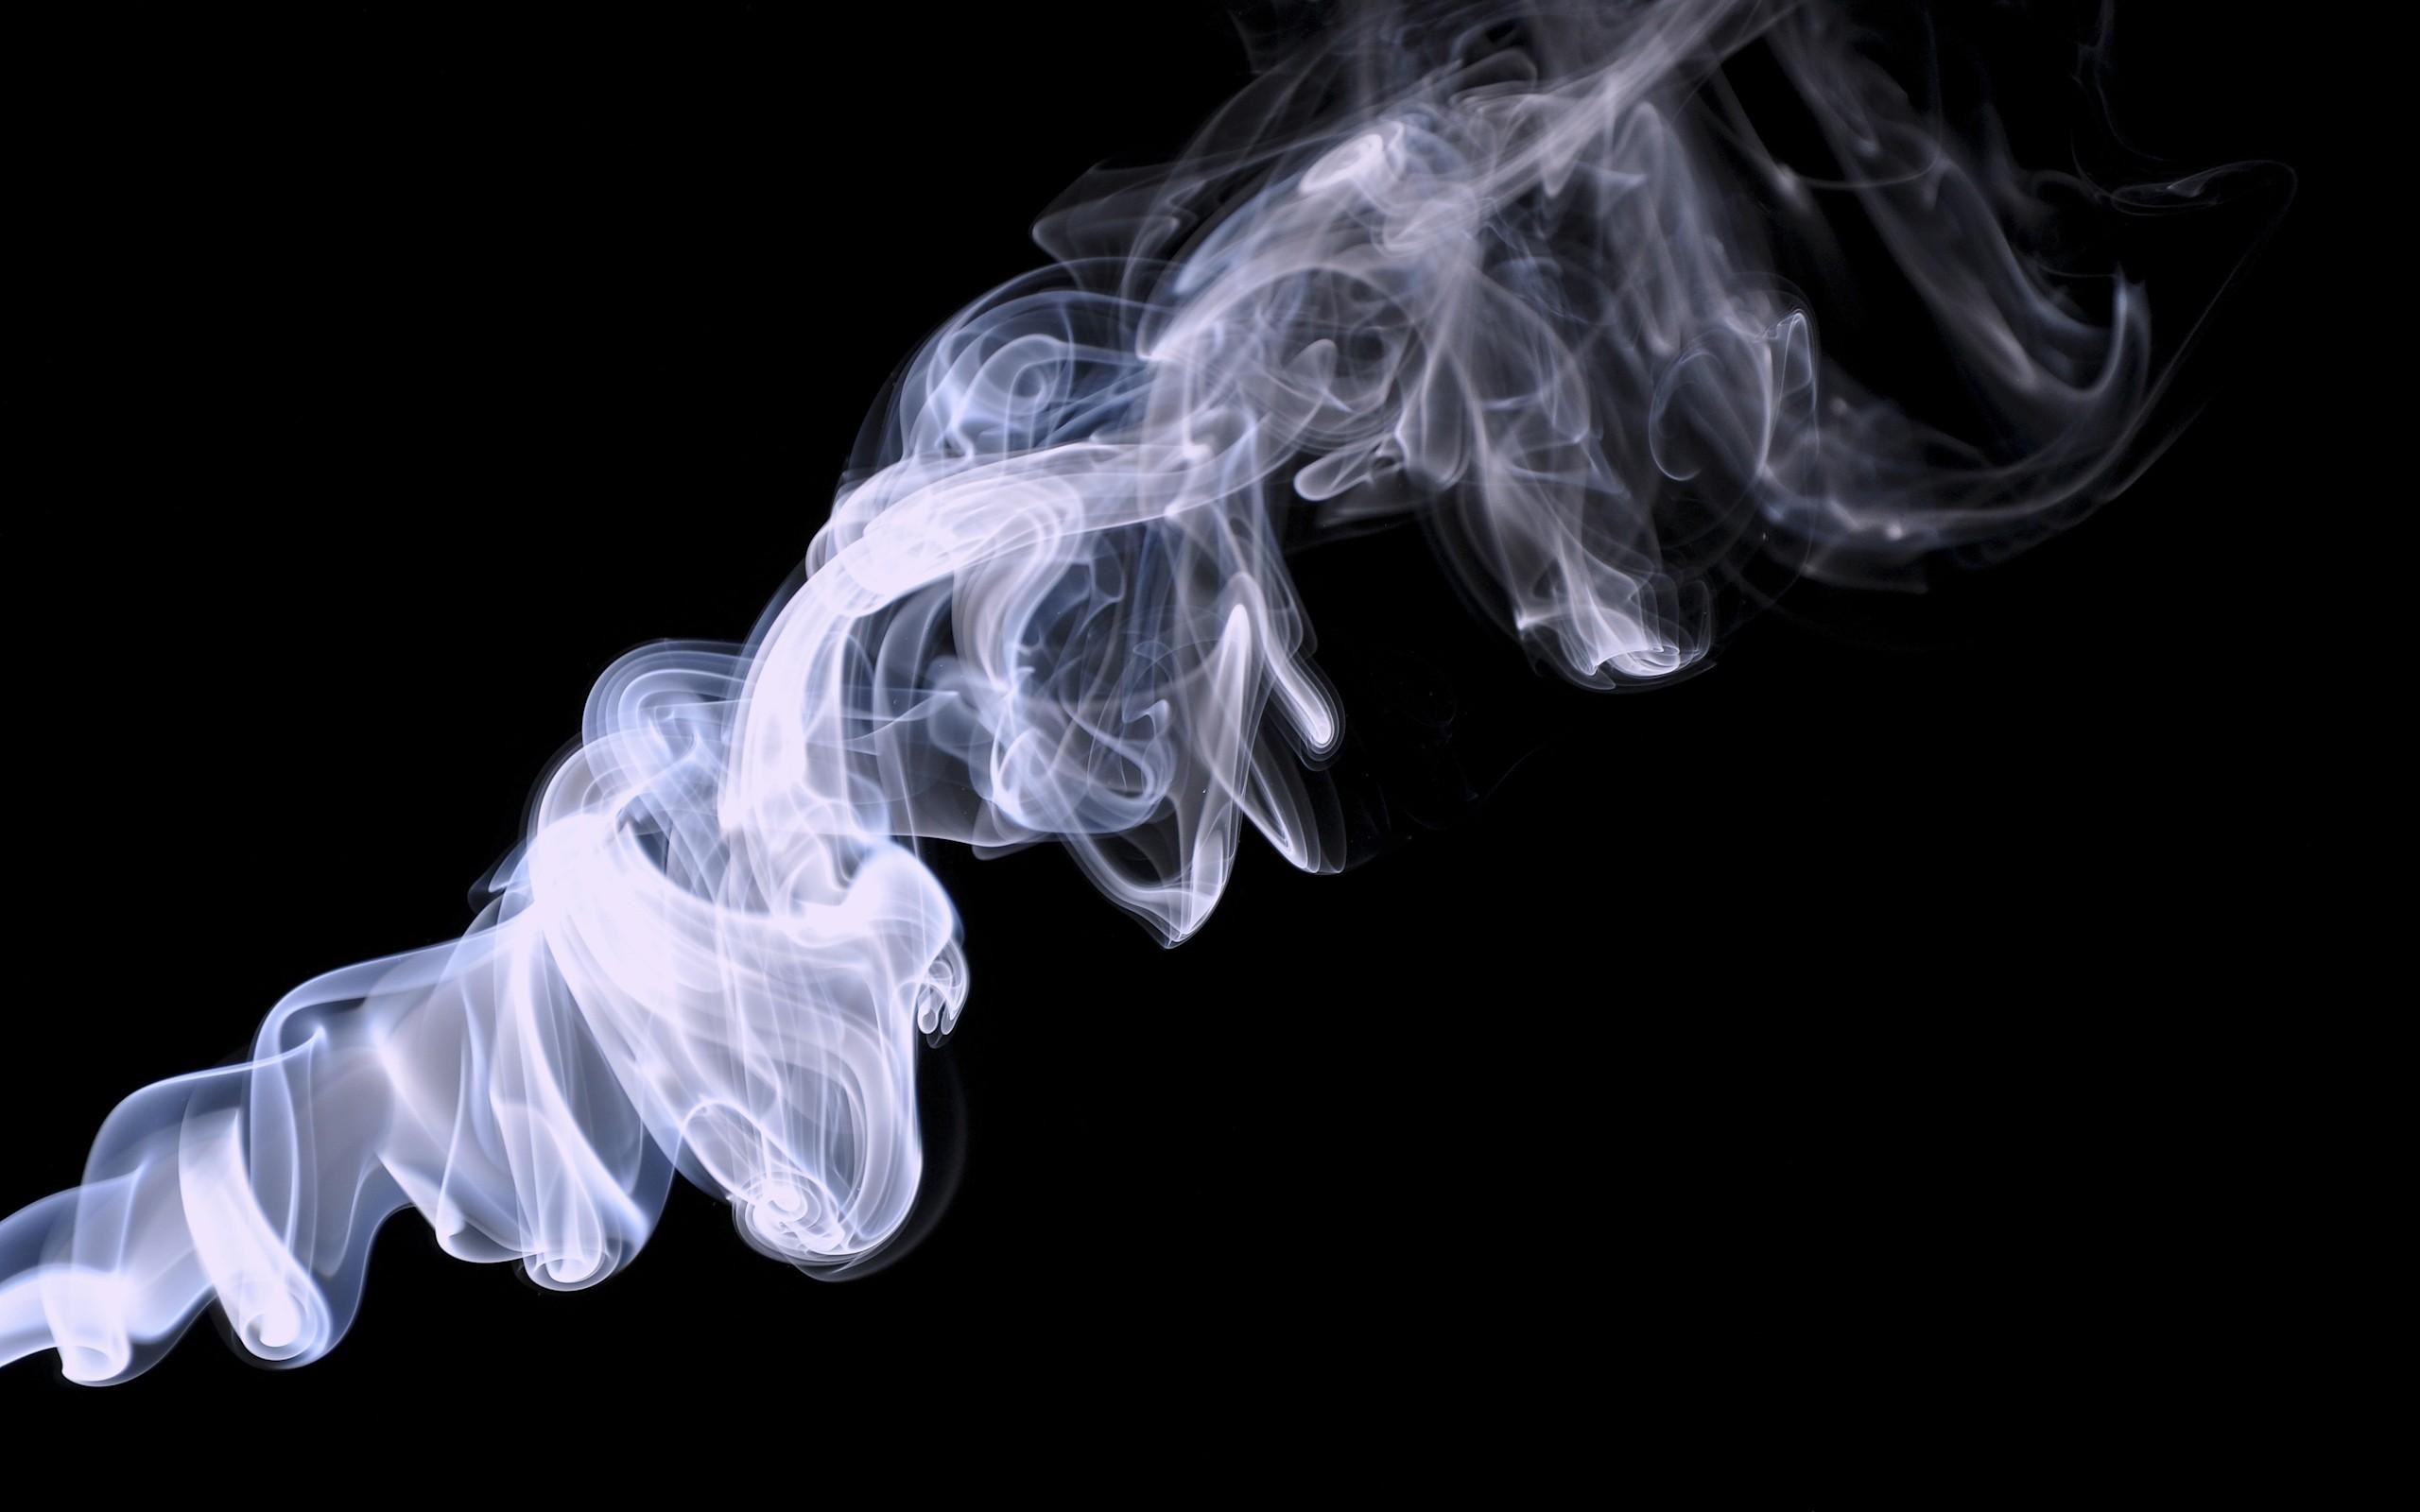 General 2560x1600 smoke artwork dark simple background black background swirls digital art